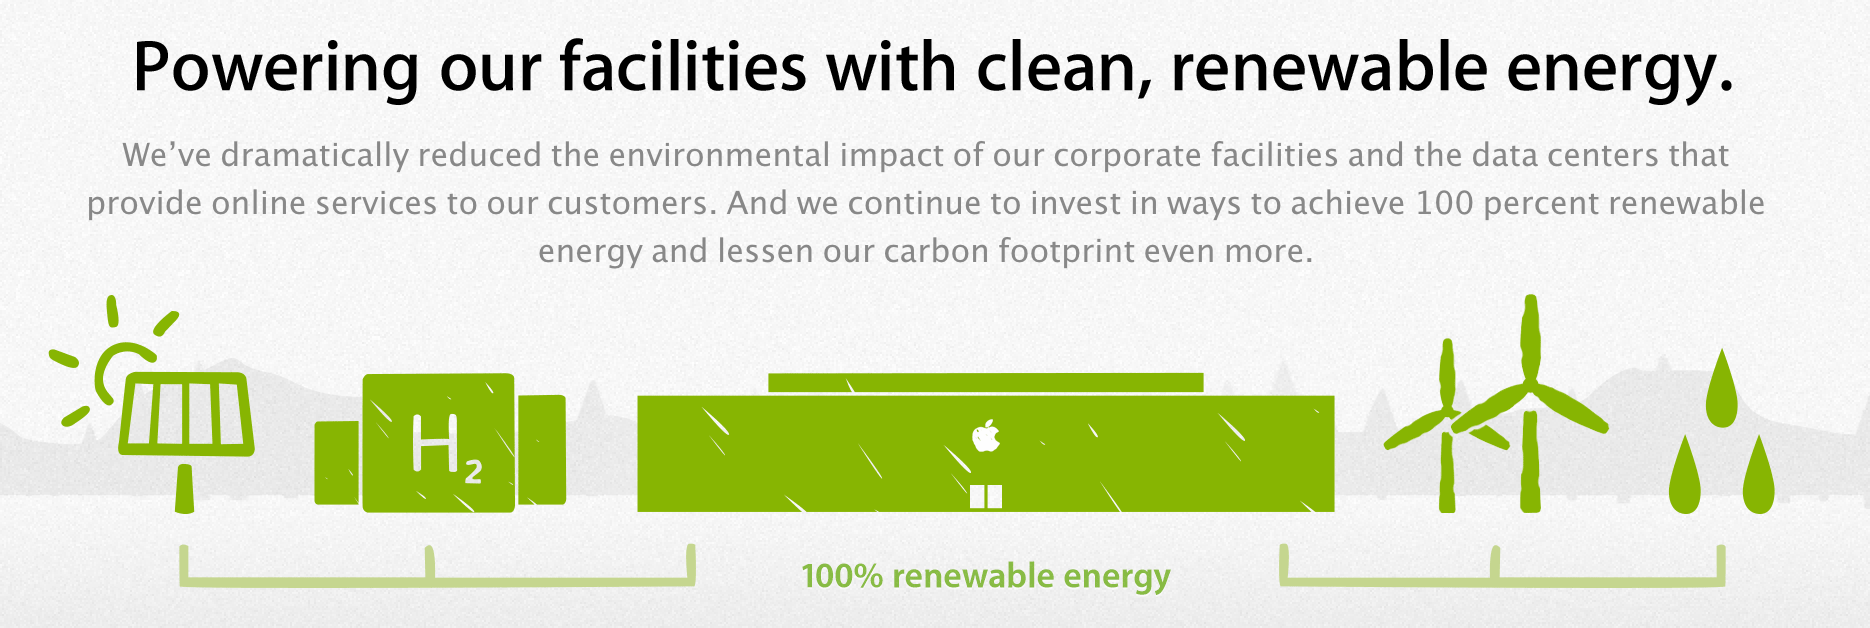 Apple-renewable-energy-report-2012